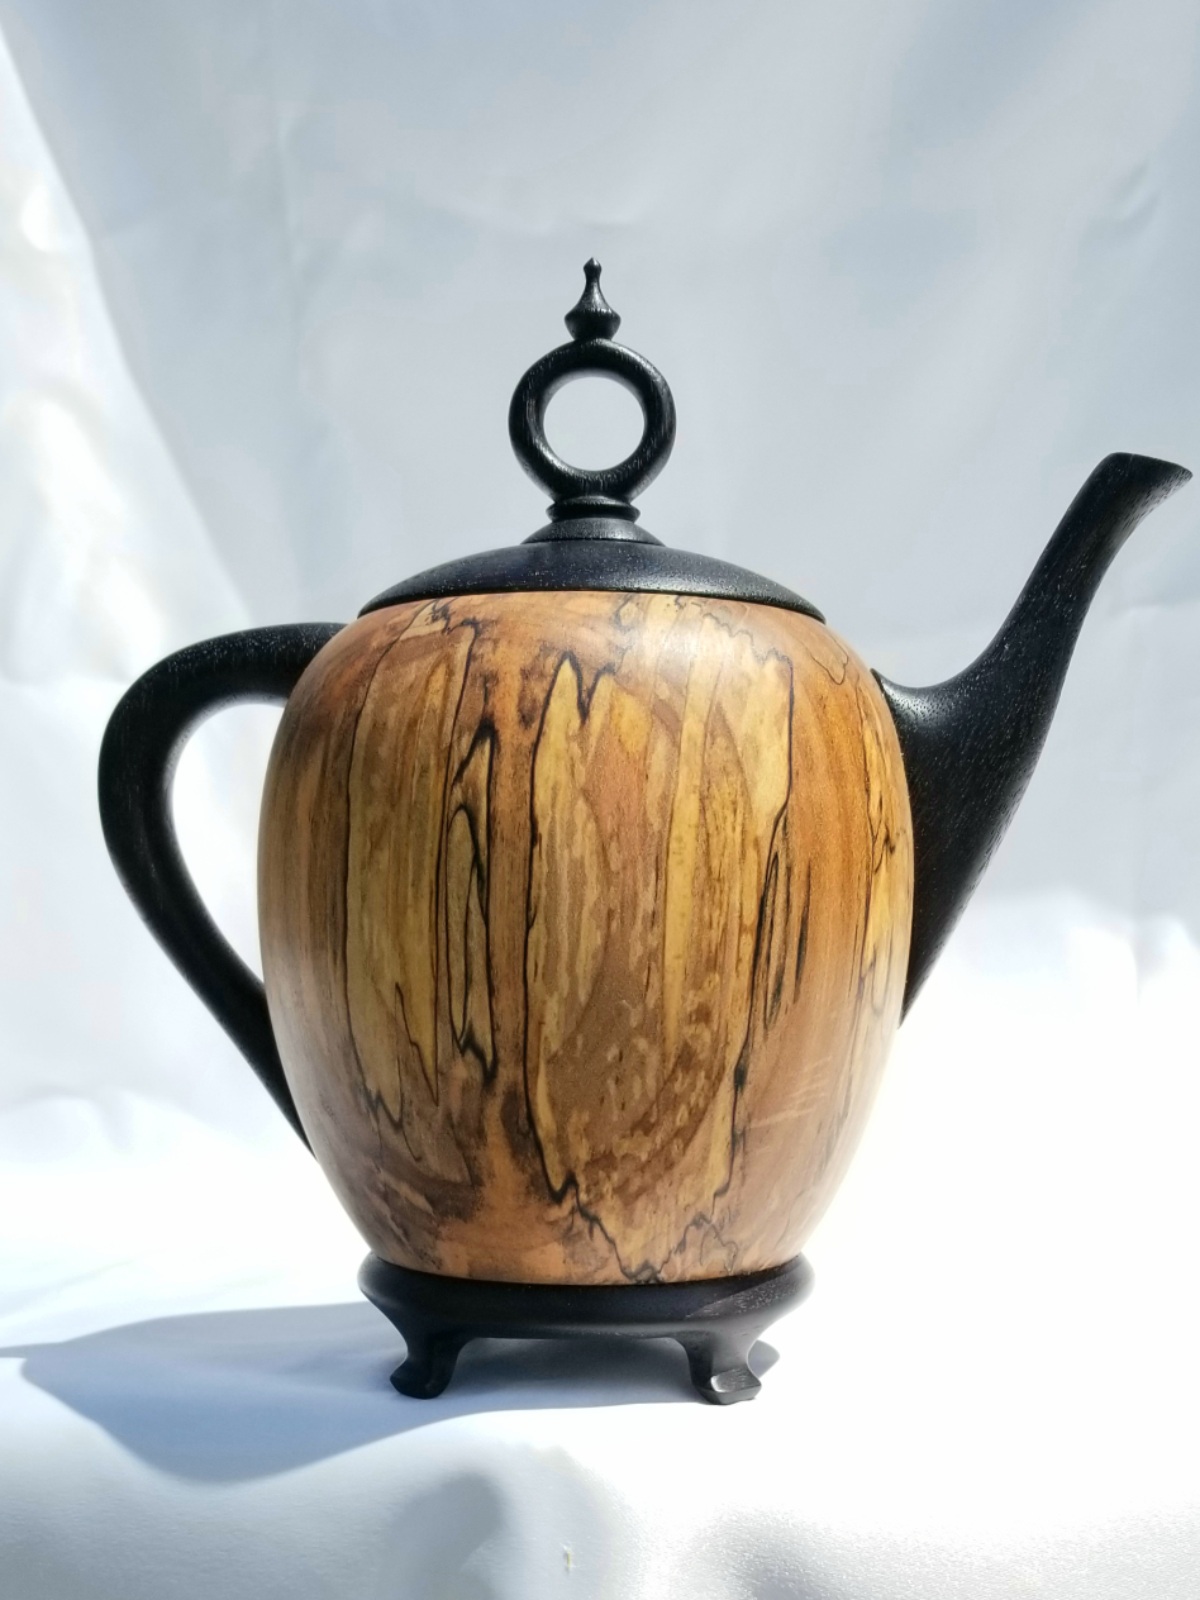 Another Teapot